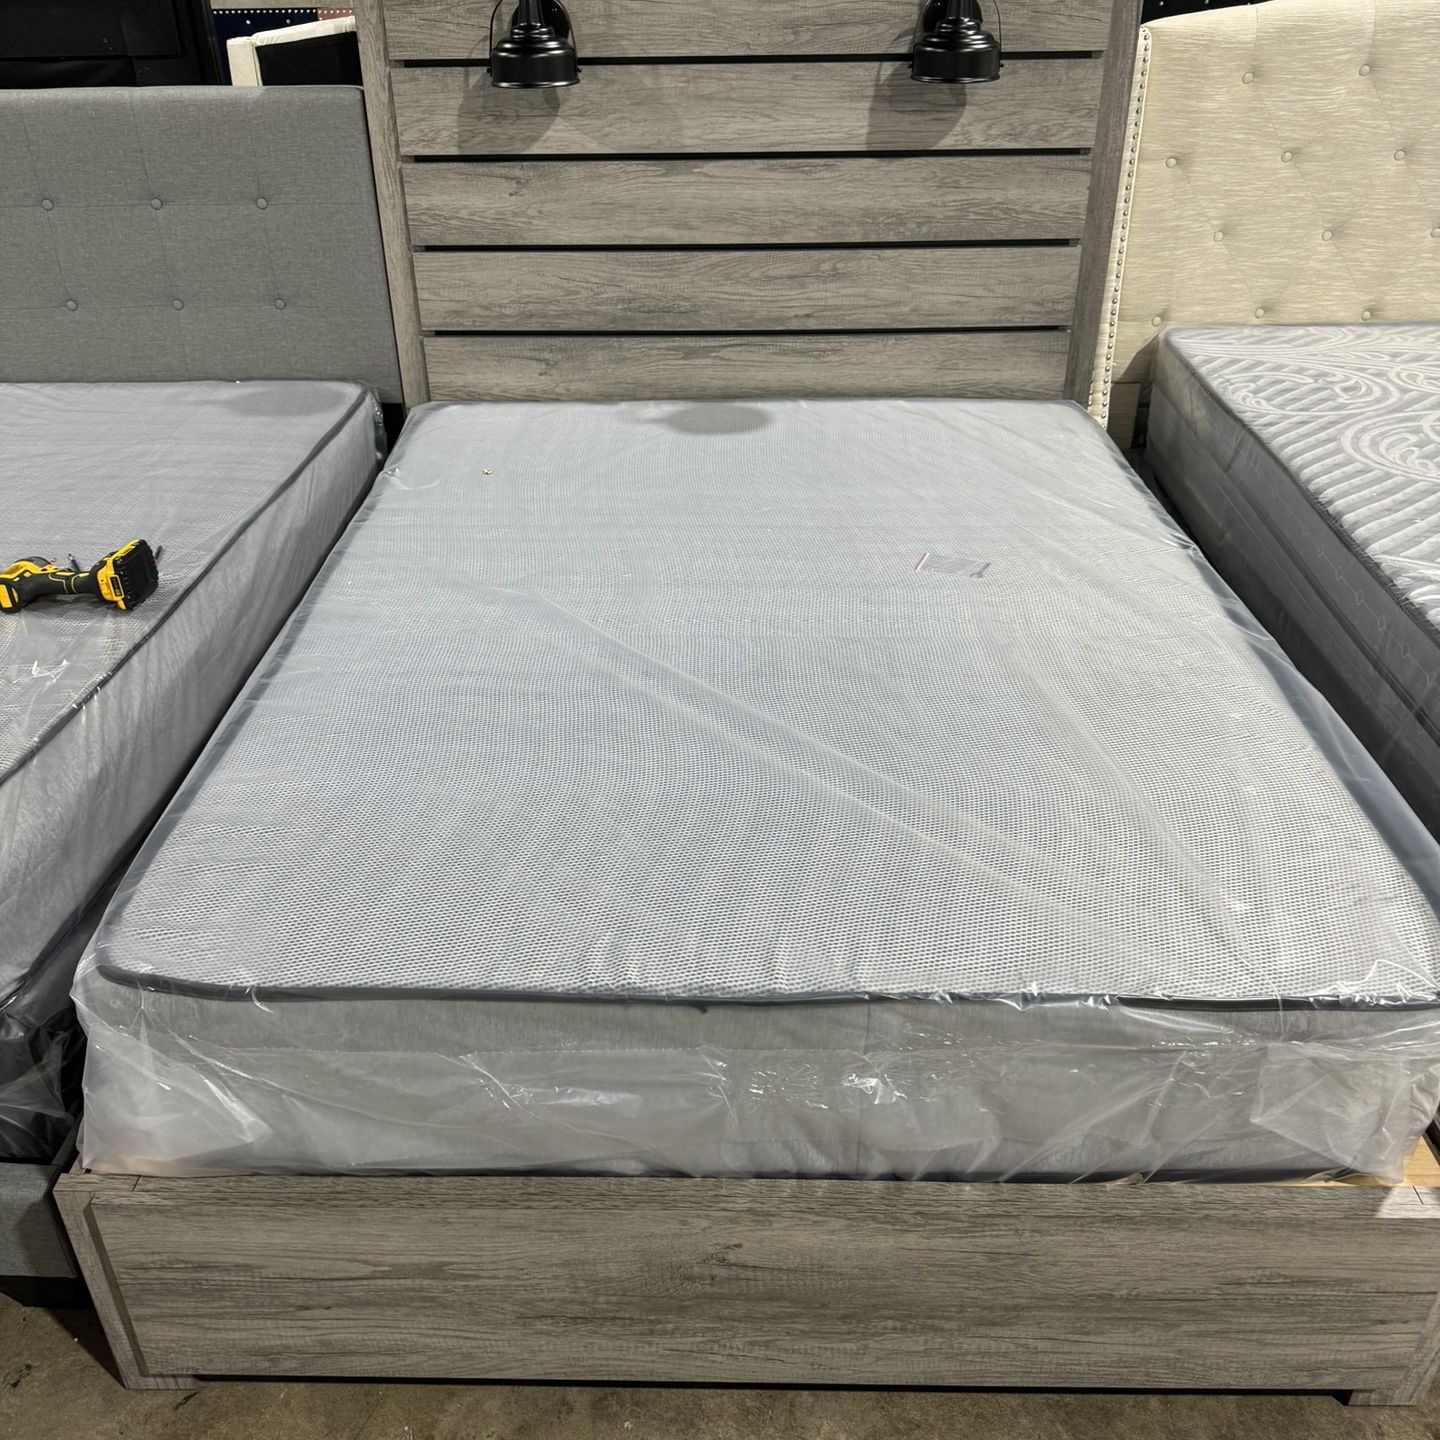 New Full Bed For $389